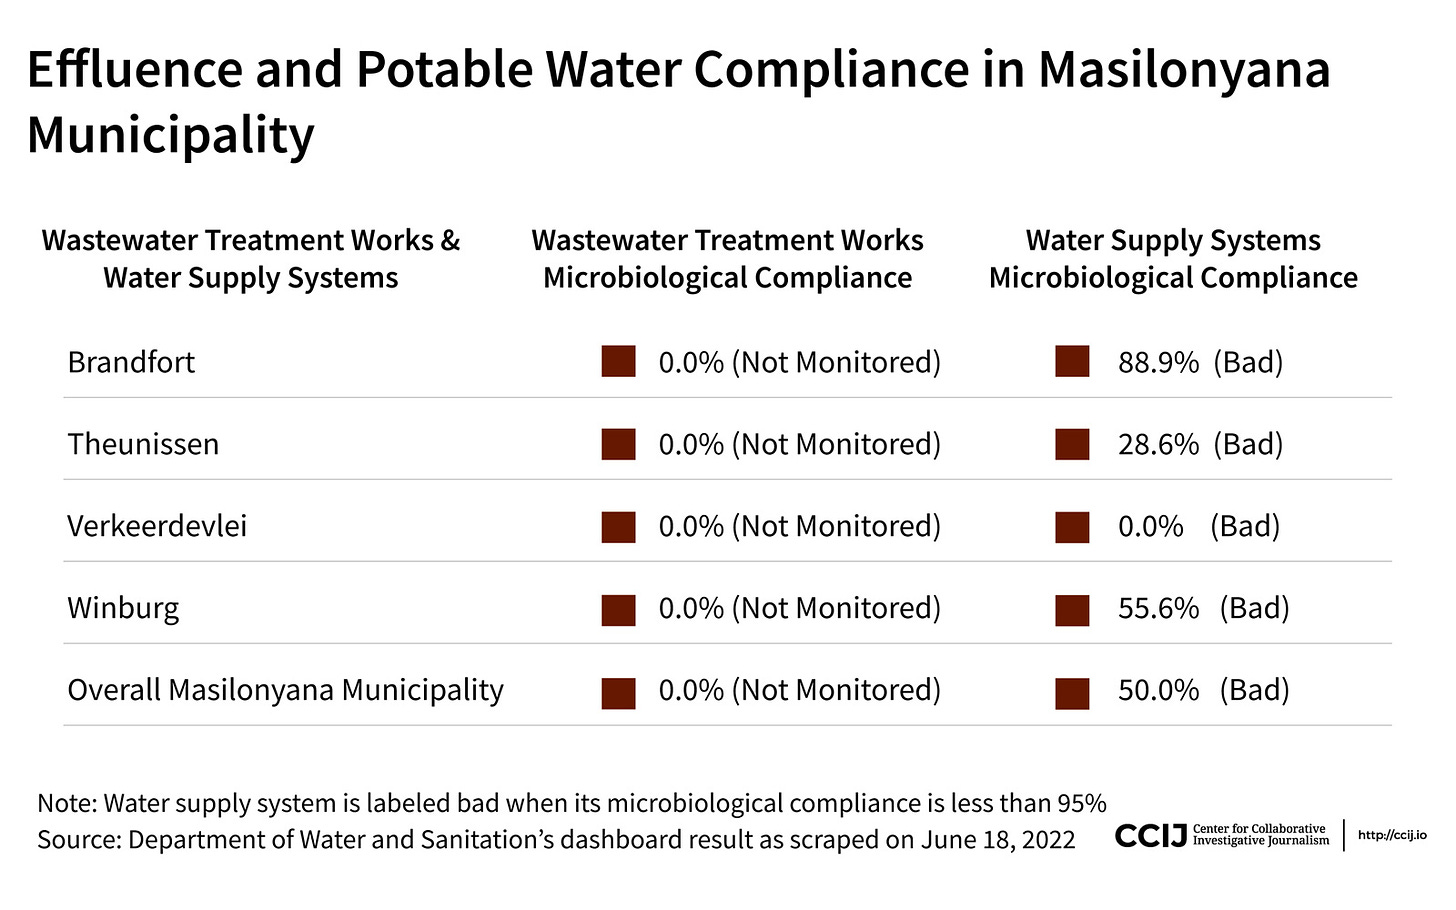 Effluence and potable water compliance in Masilonyana Municipality